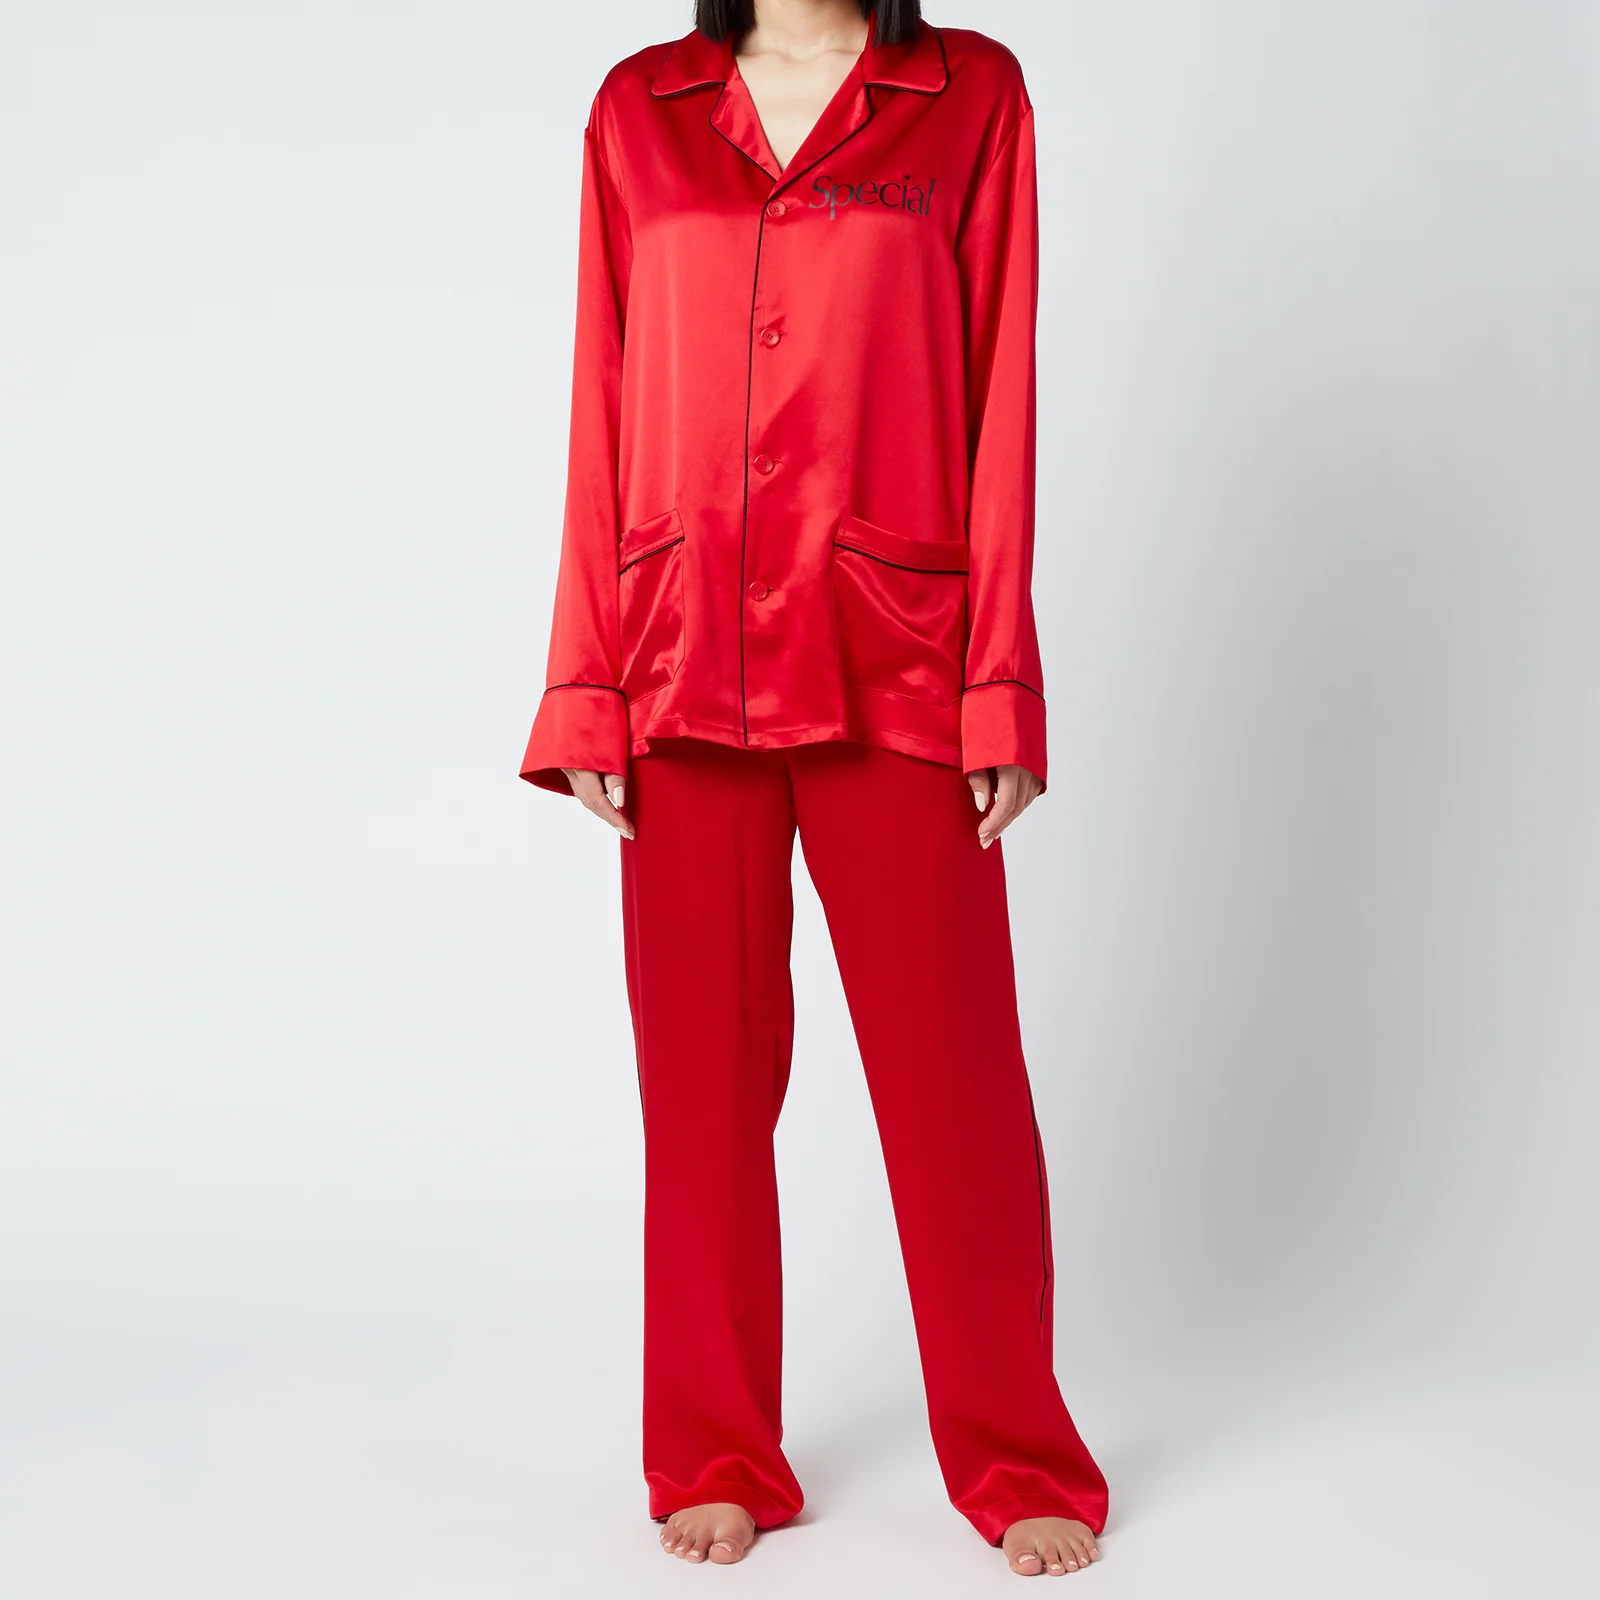 More Joy Women's Special Pyjamas - Red Image 1